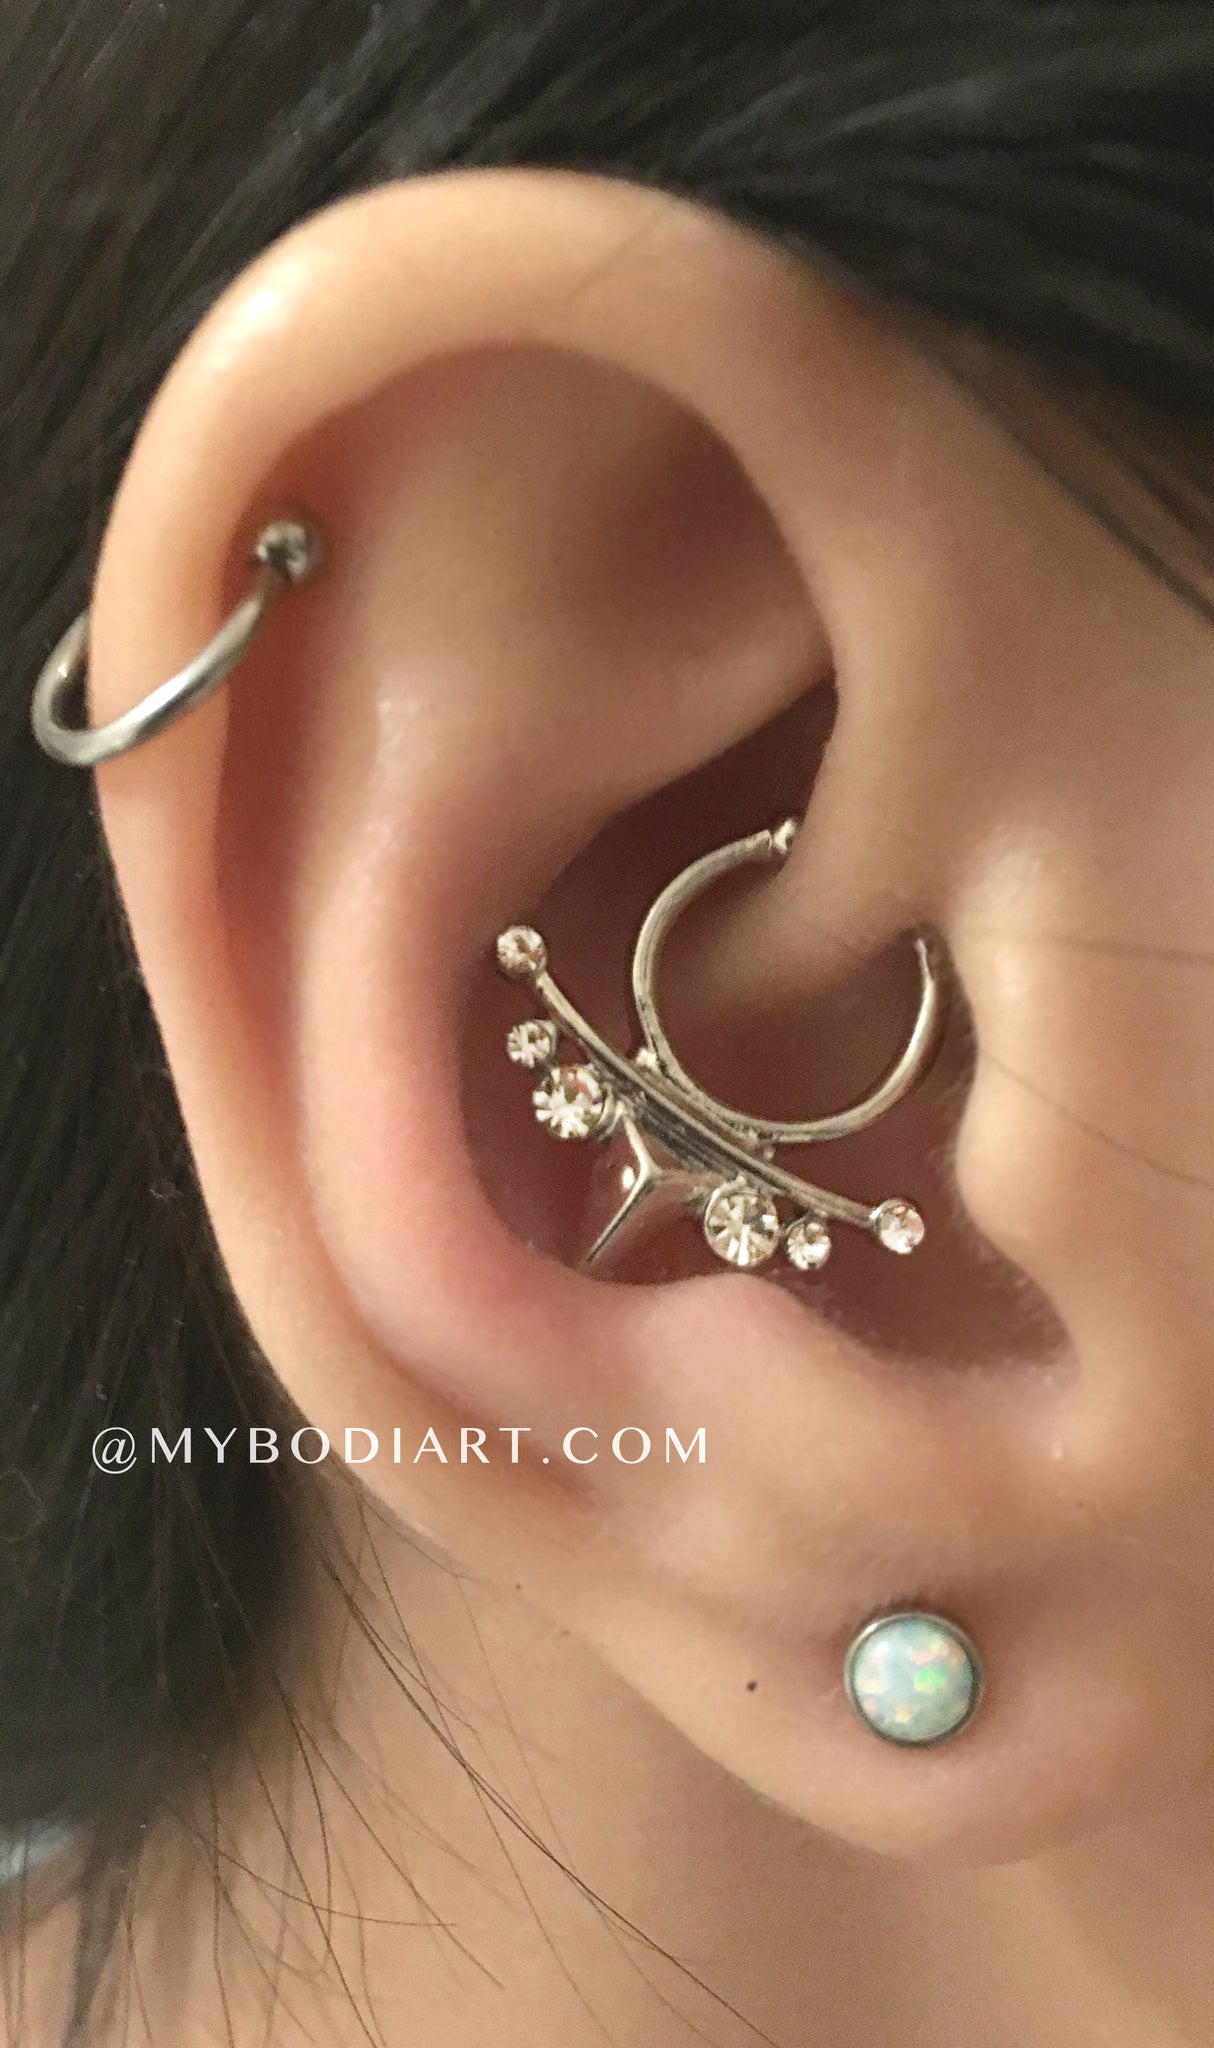 Trendy Fashion Multiple Ear Piercing Ideas Cartilage Ring Hoop  Daith Earring - at MyBodIArt.com 